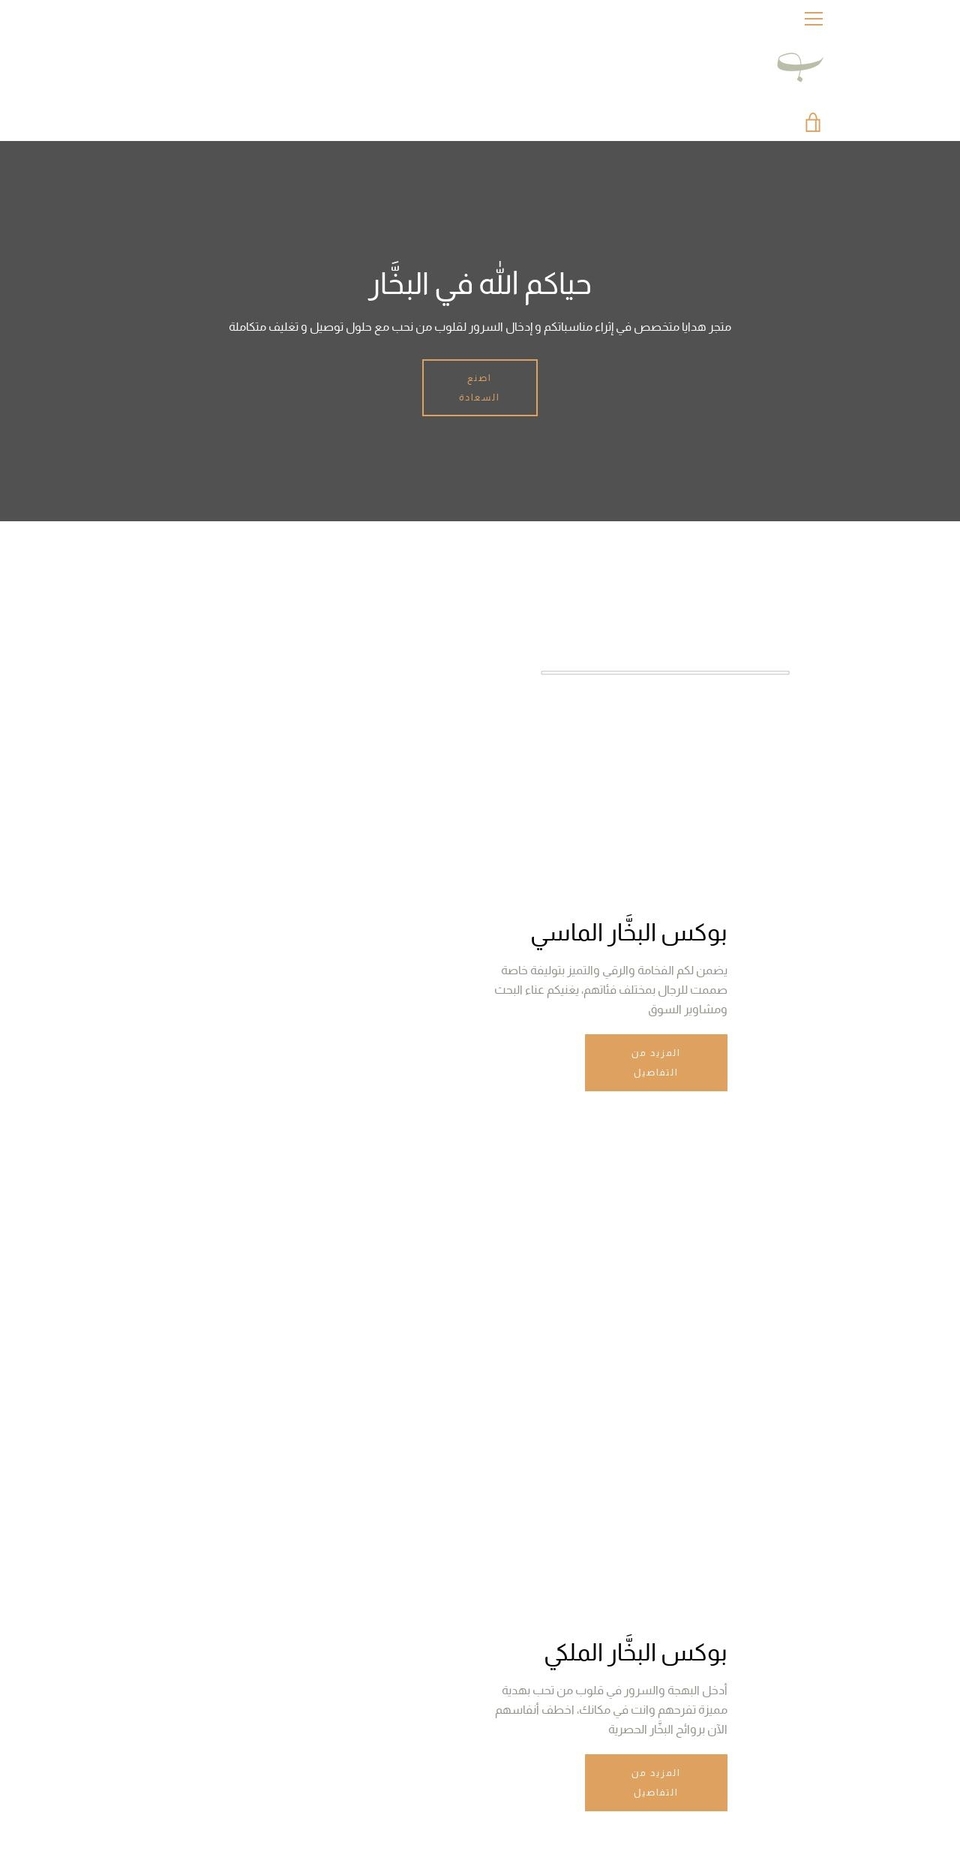 bakhar.ae shopify website screenshot